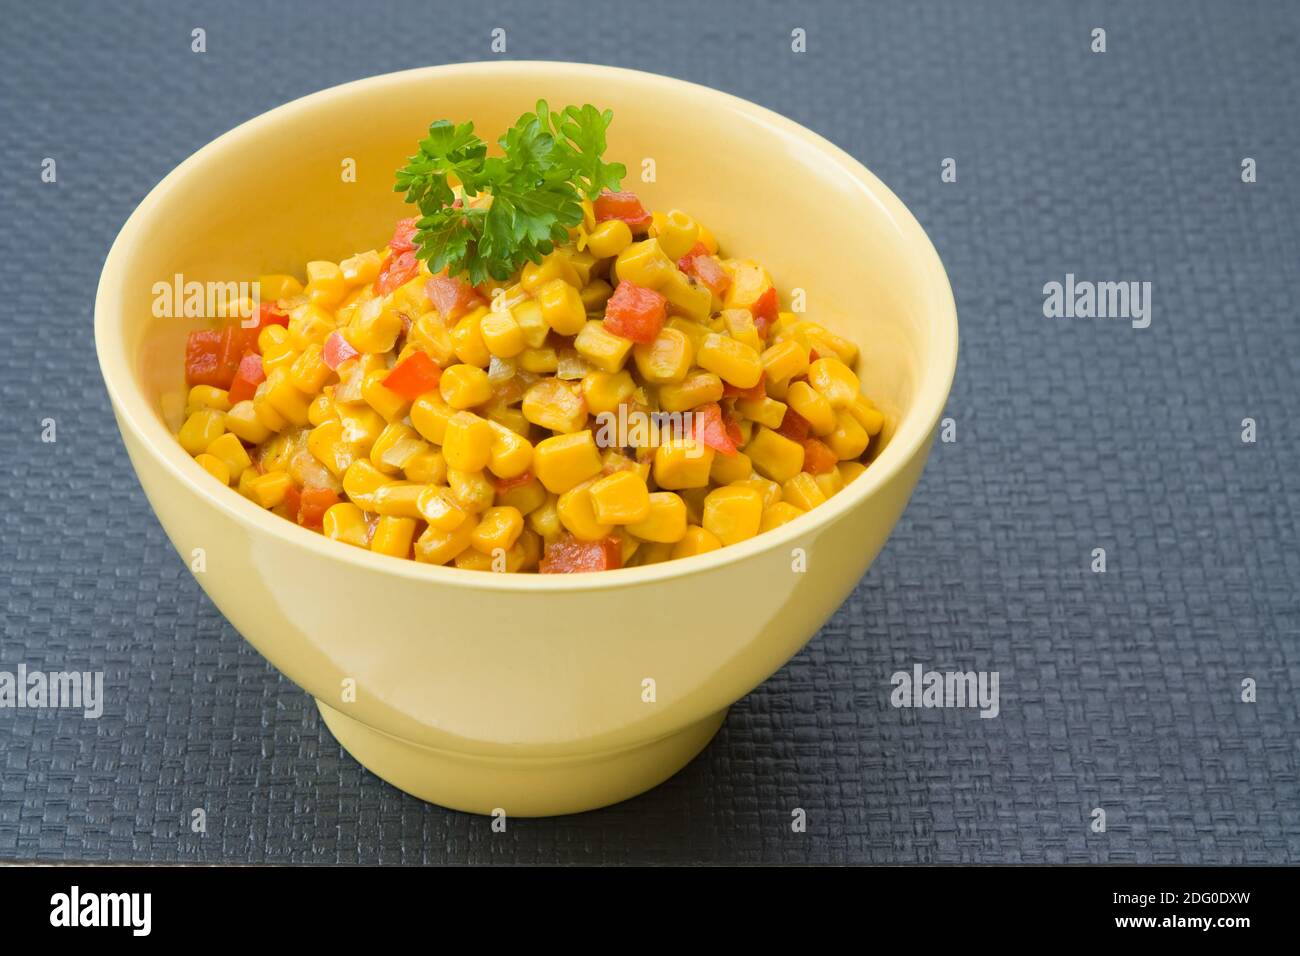 Kokosmilch Mais Curry - Coconut milk Corn Curry Stock Photo - Alamy